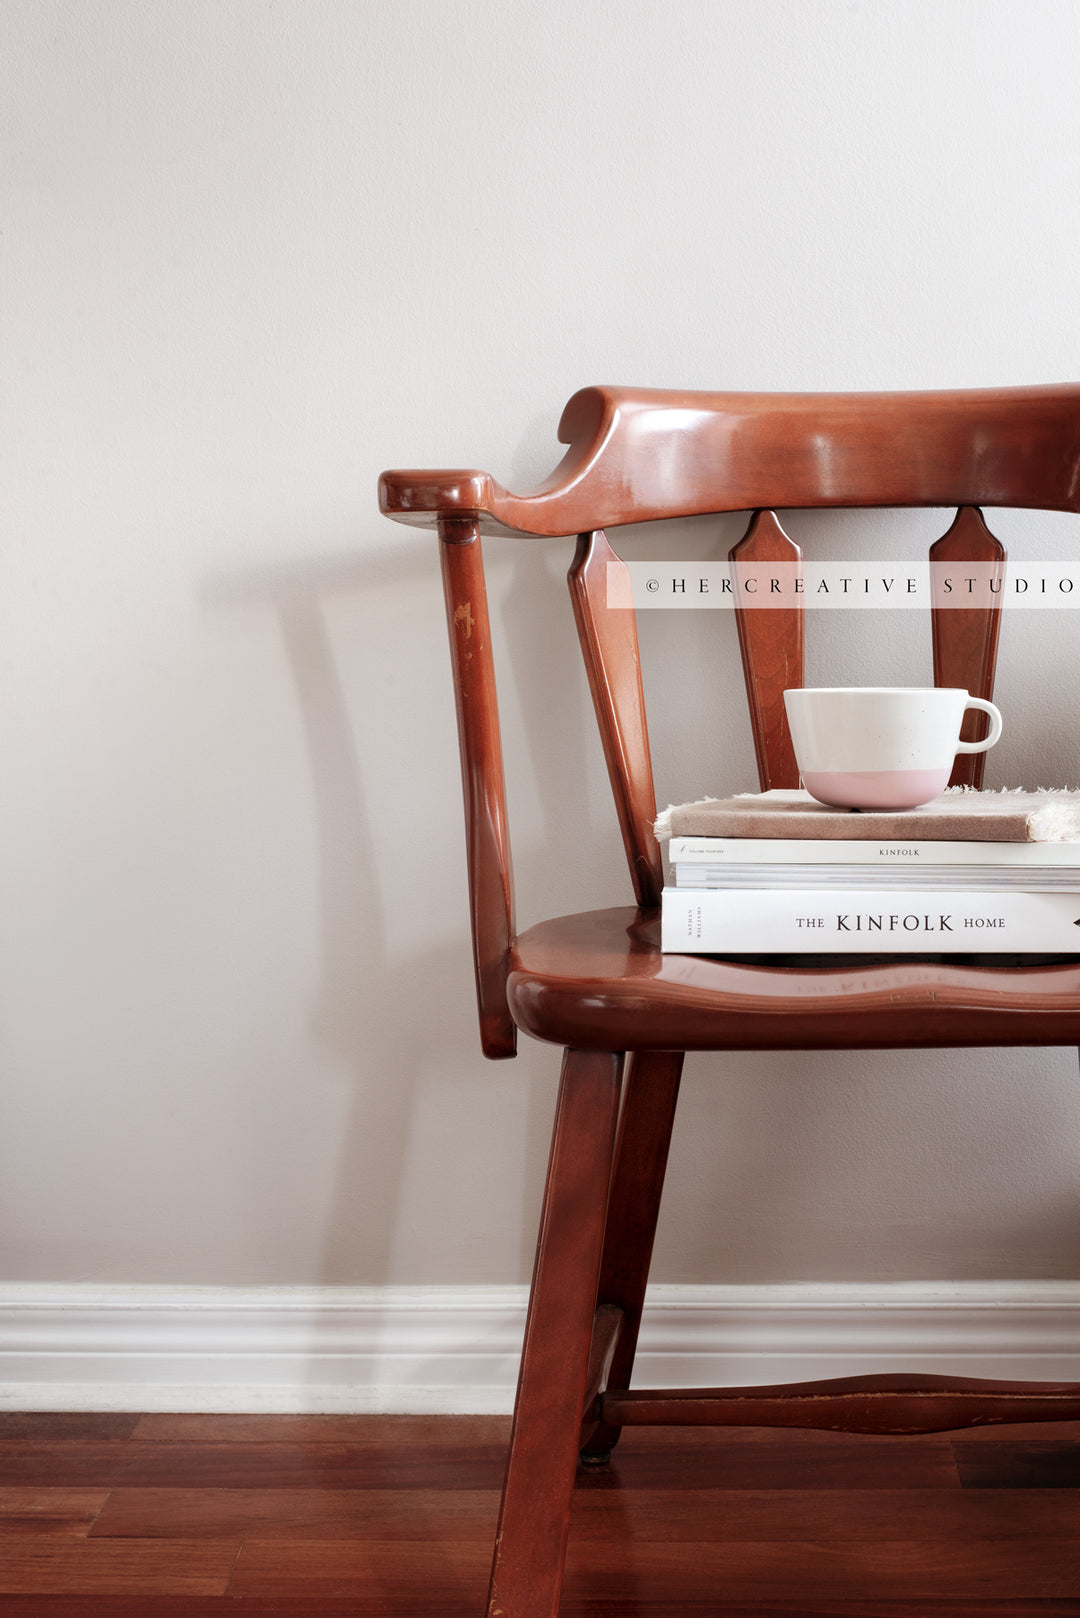 Coffee on Brown Chair. Digital Image.